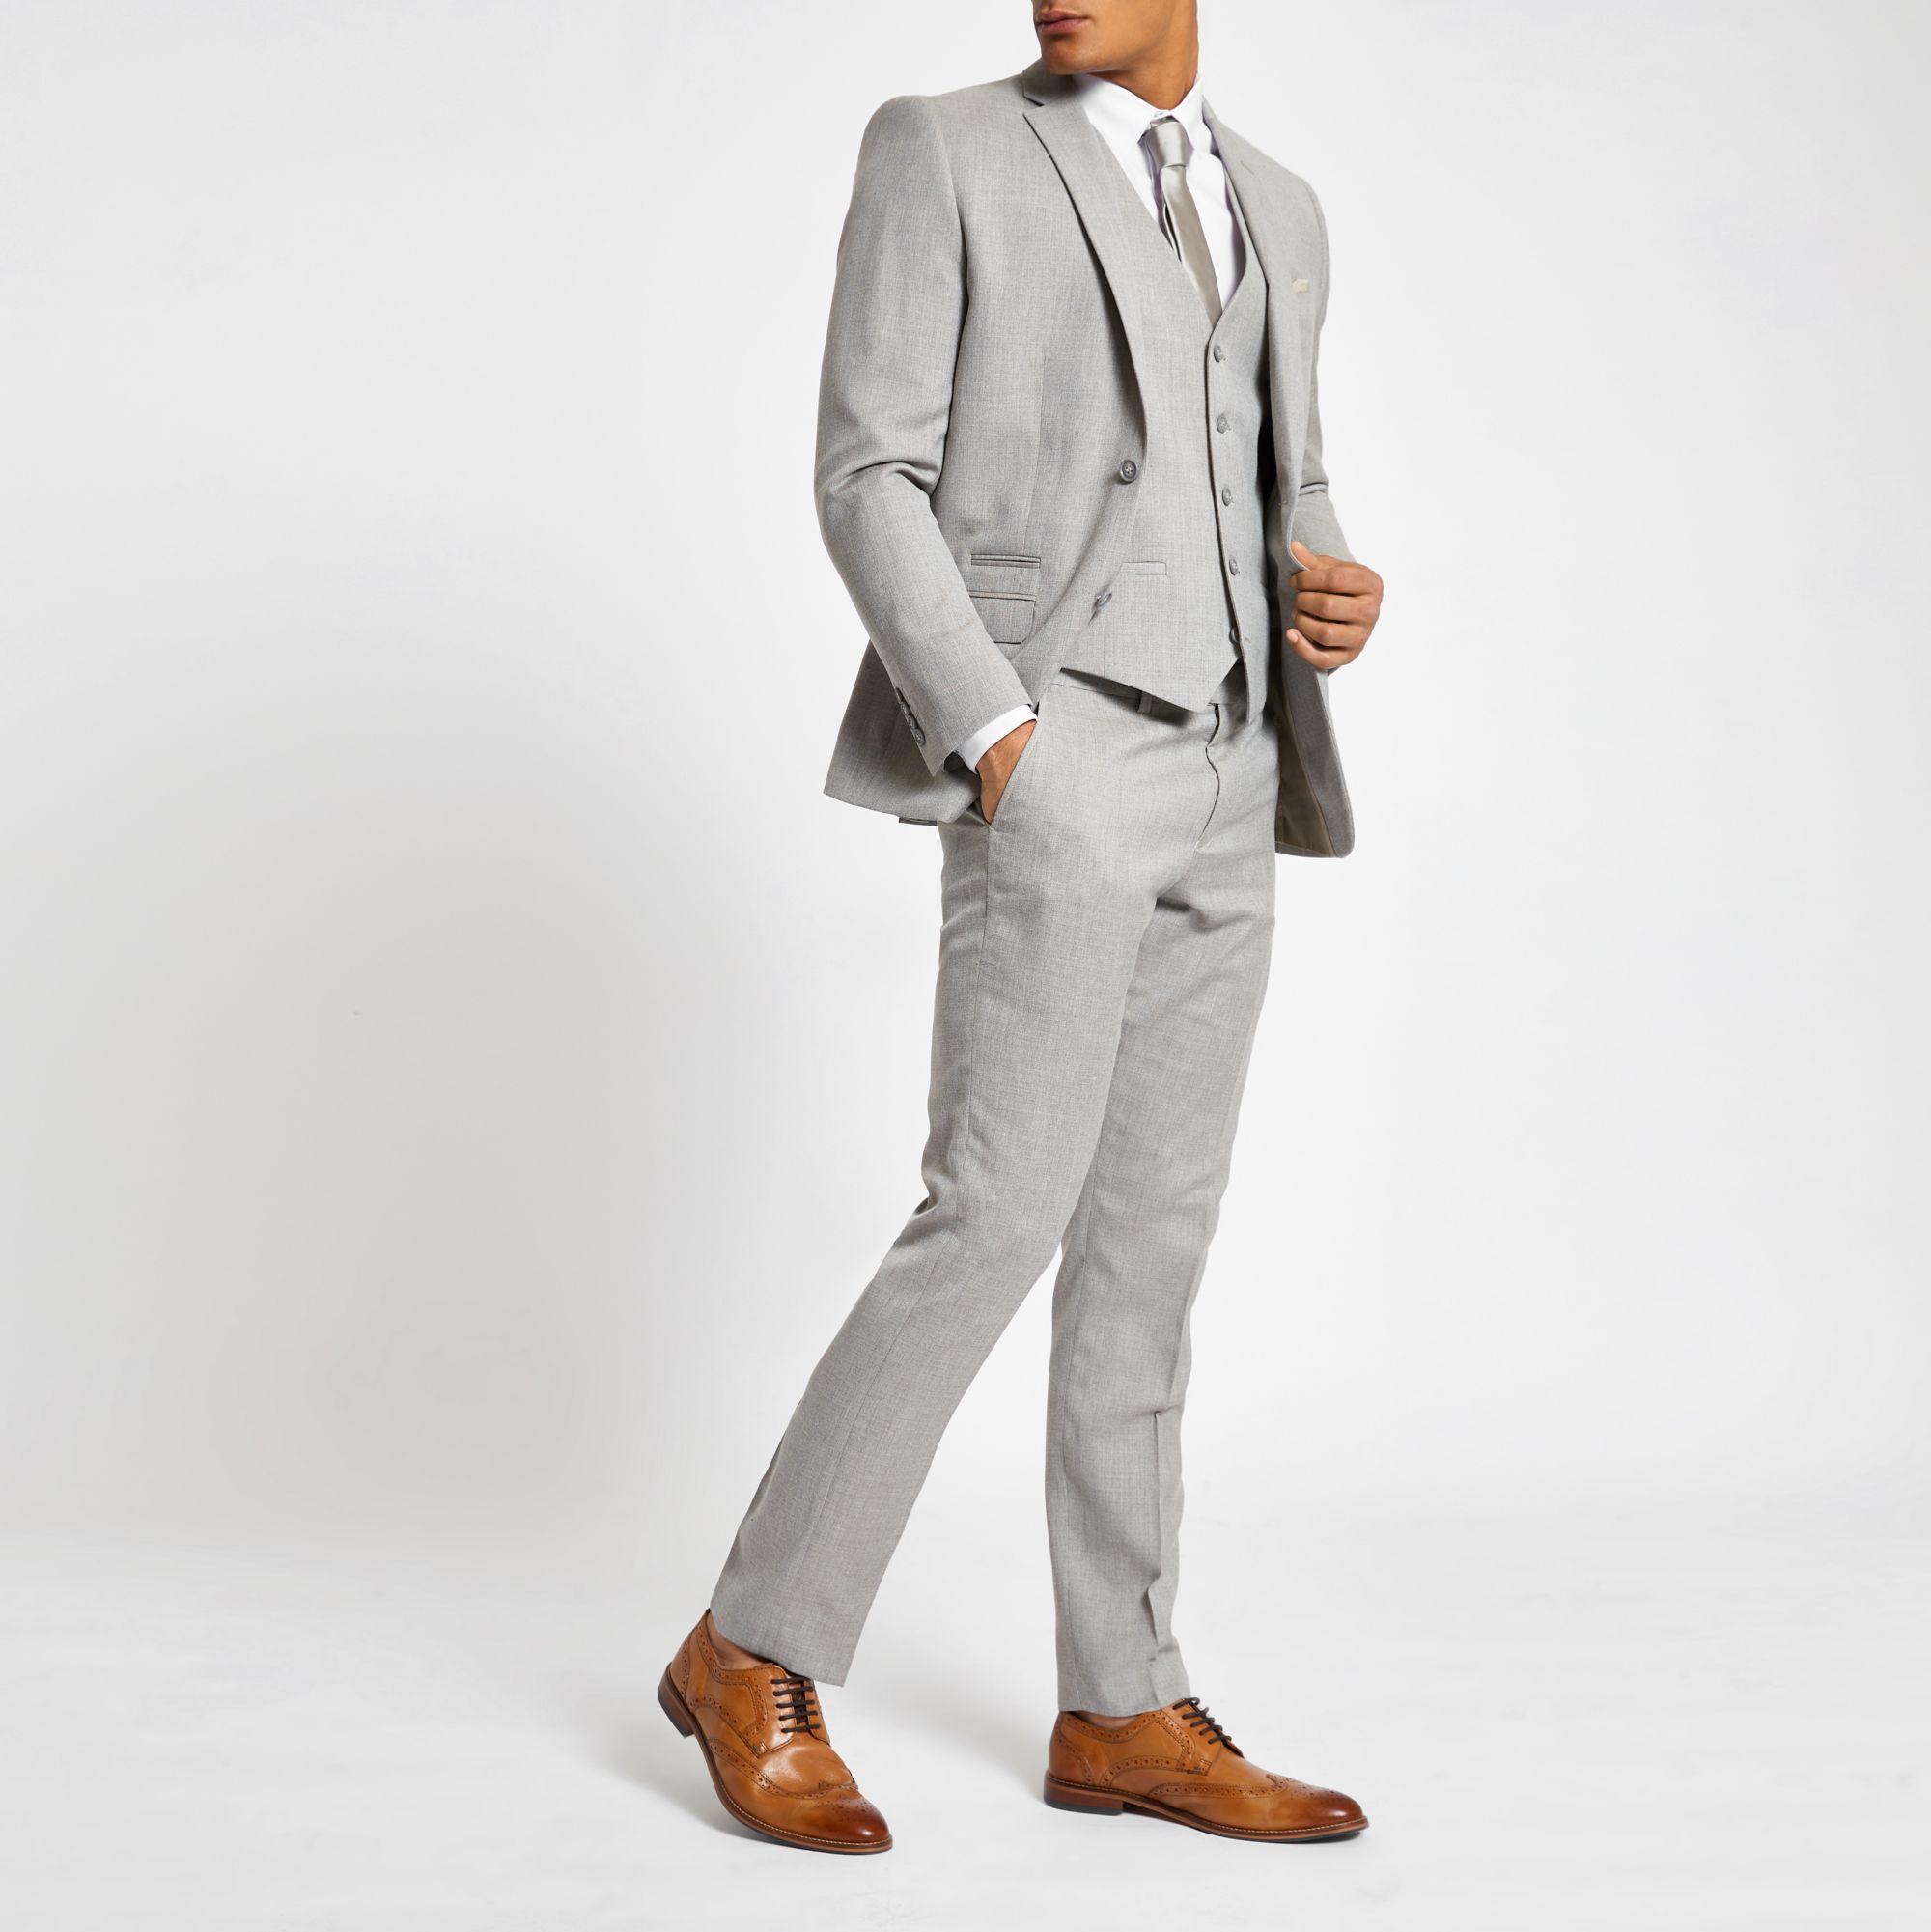 River Island Linen Light Grey Suit Vest in Gray for Men - Lyst